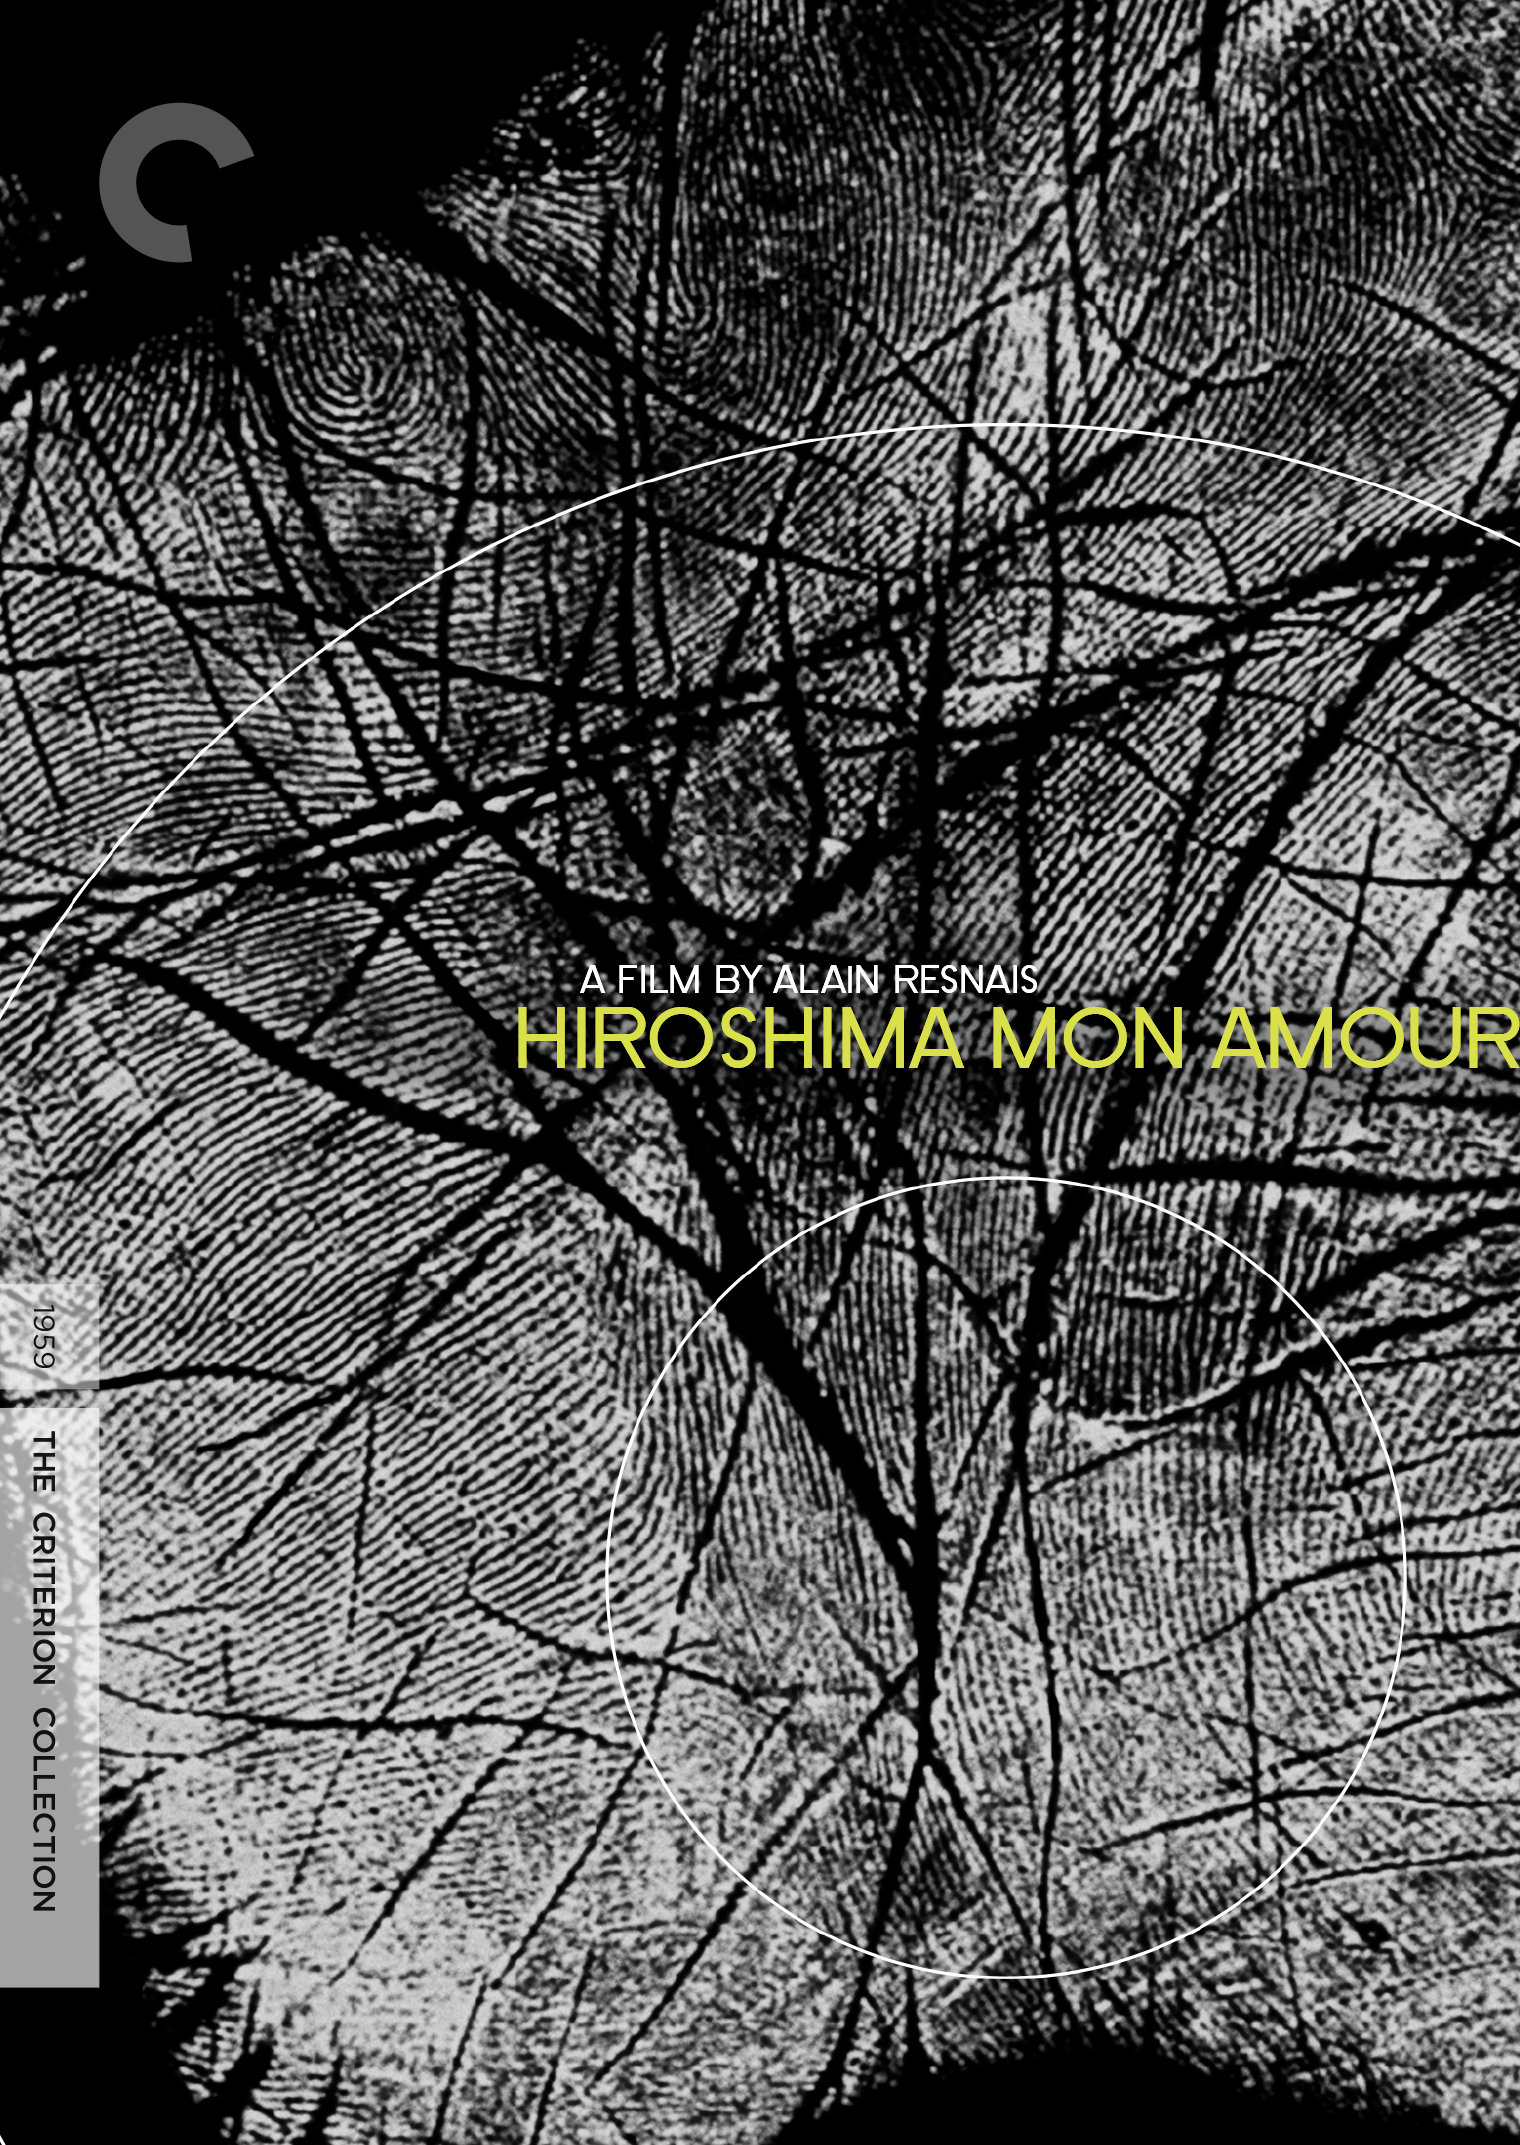 Hiroshima_DVDcover